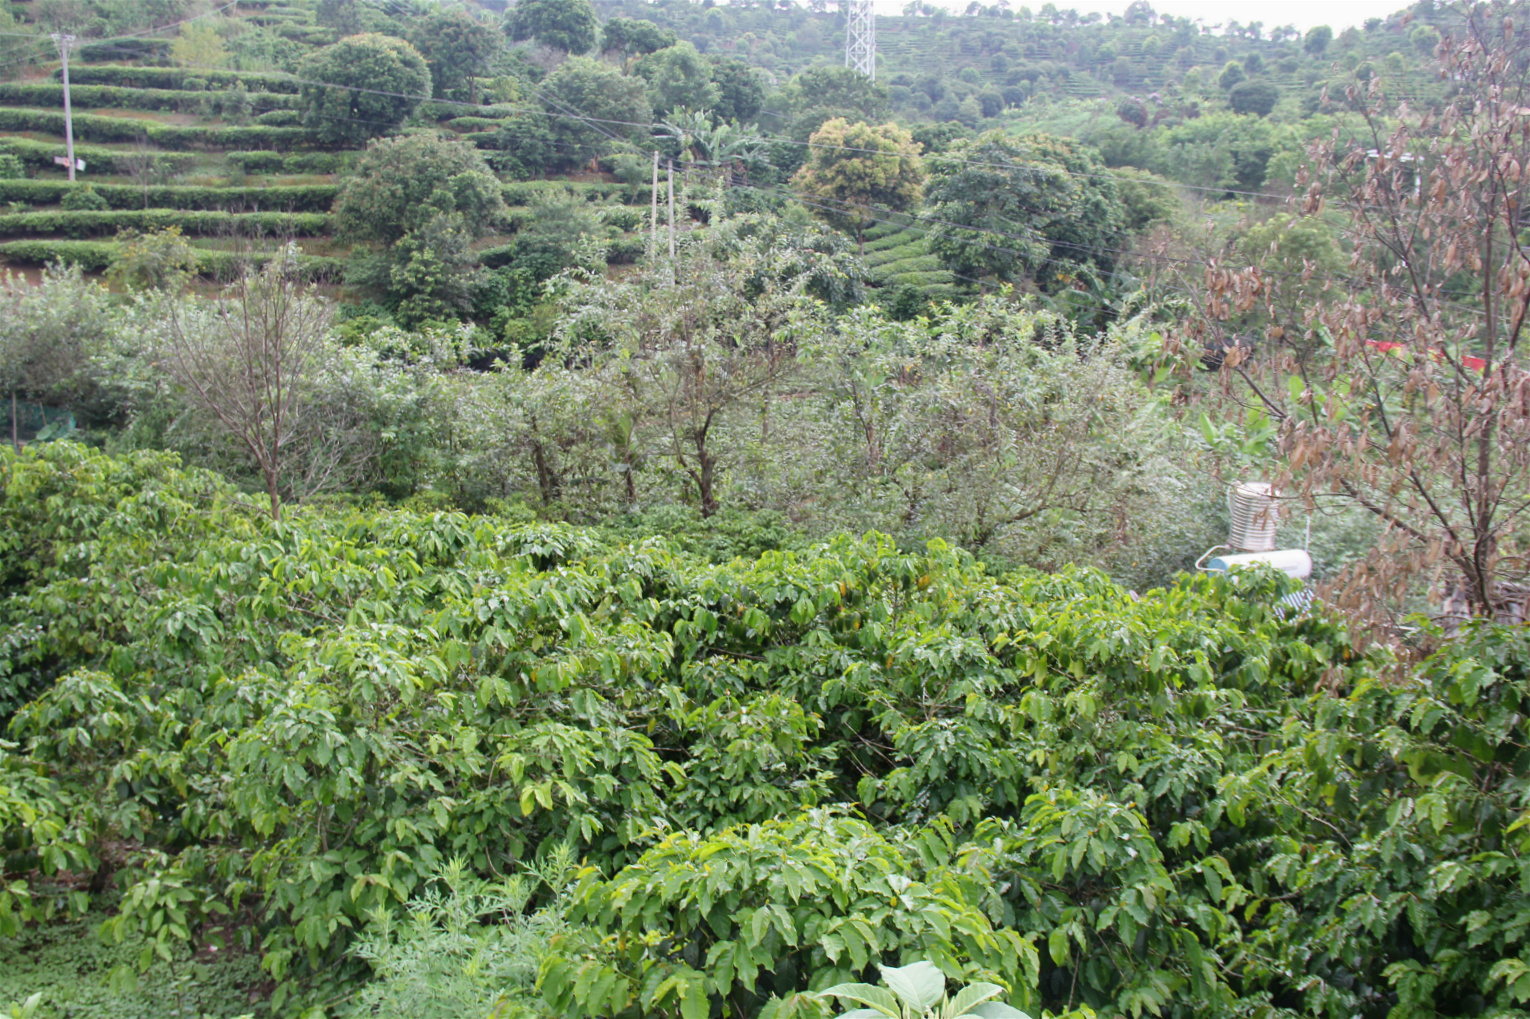 Coffee plants in Pu'er